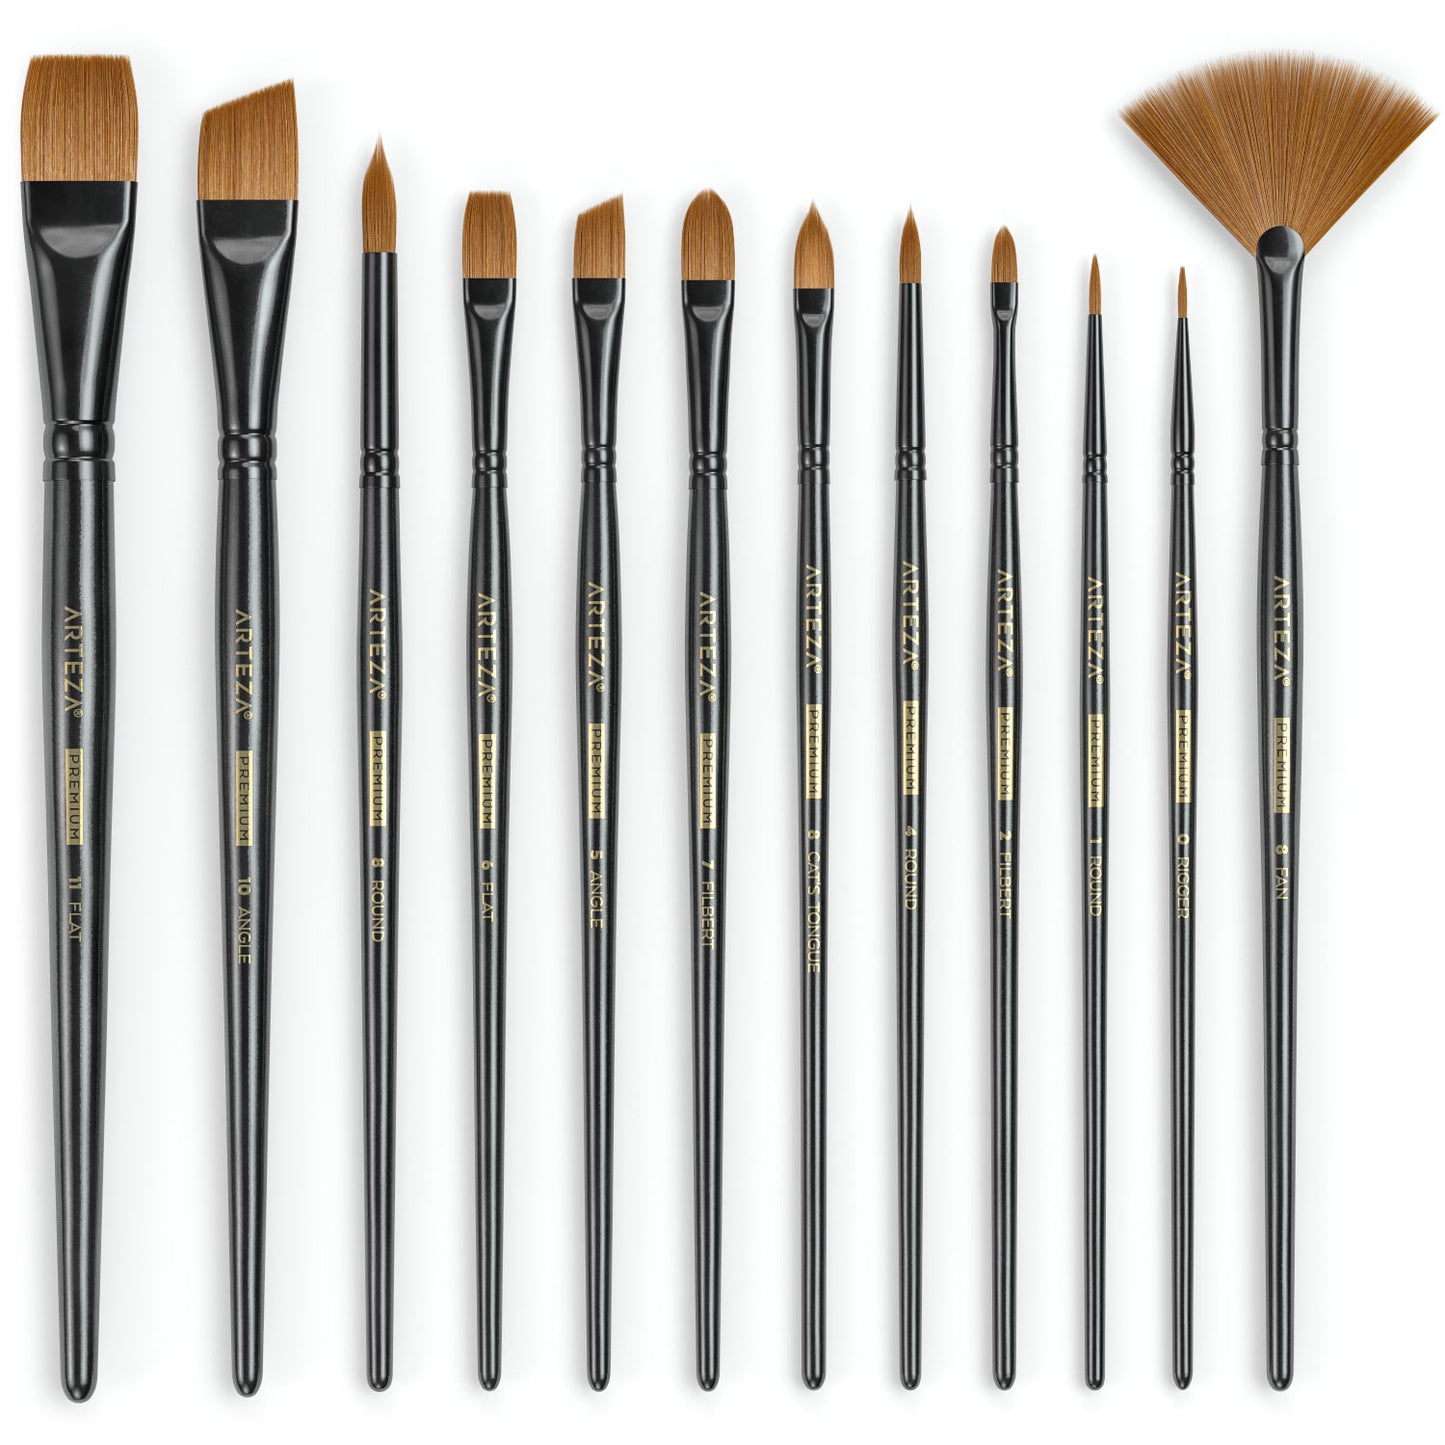 DACO Fine Detail Art Brushes 7pcs+1 for Acrylic & Oil paint, Brush